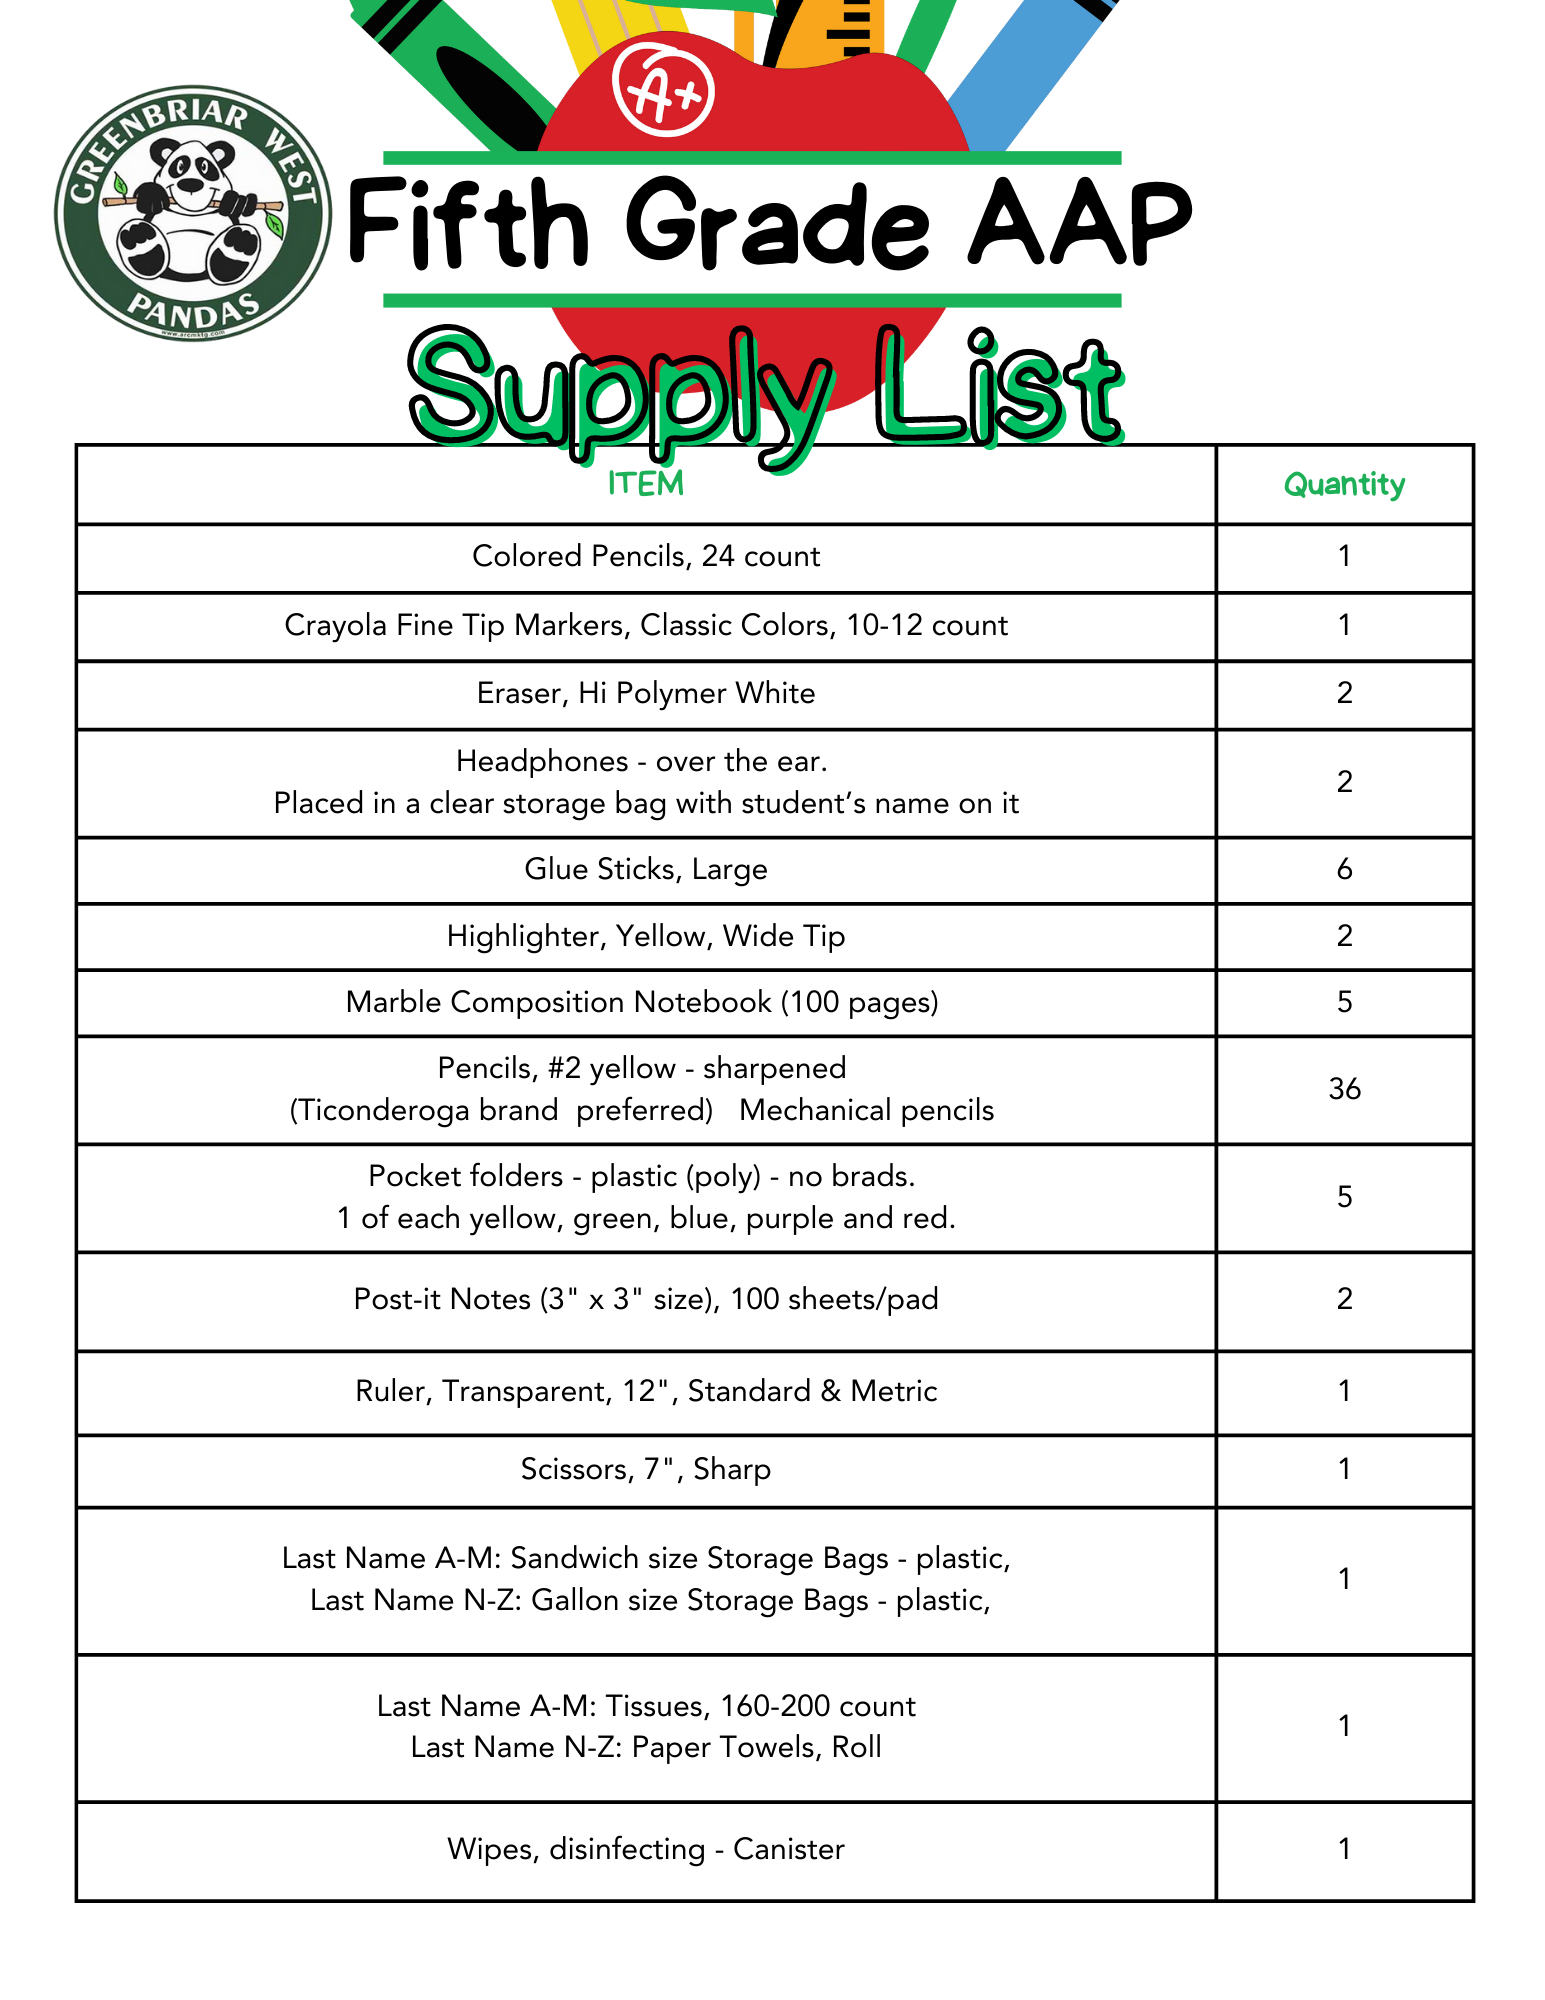 5th grade AAP list 